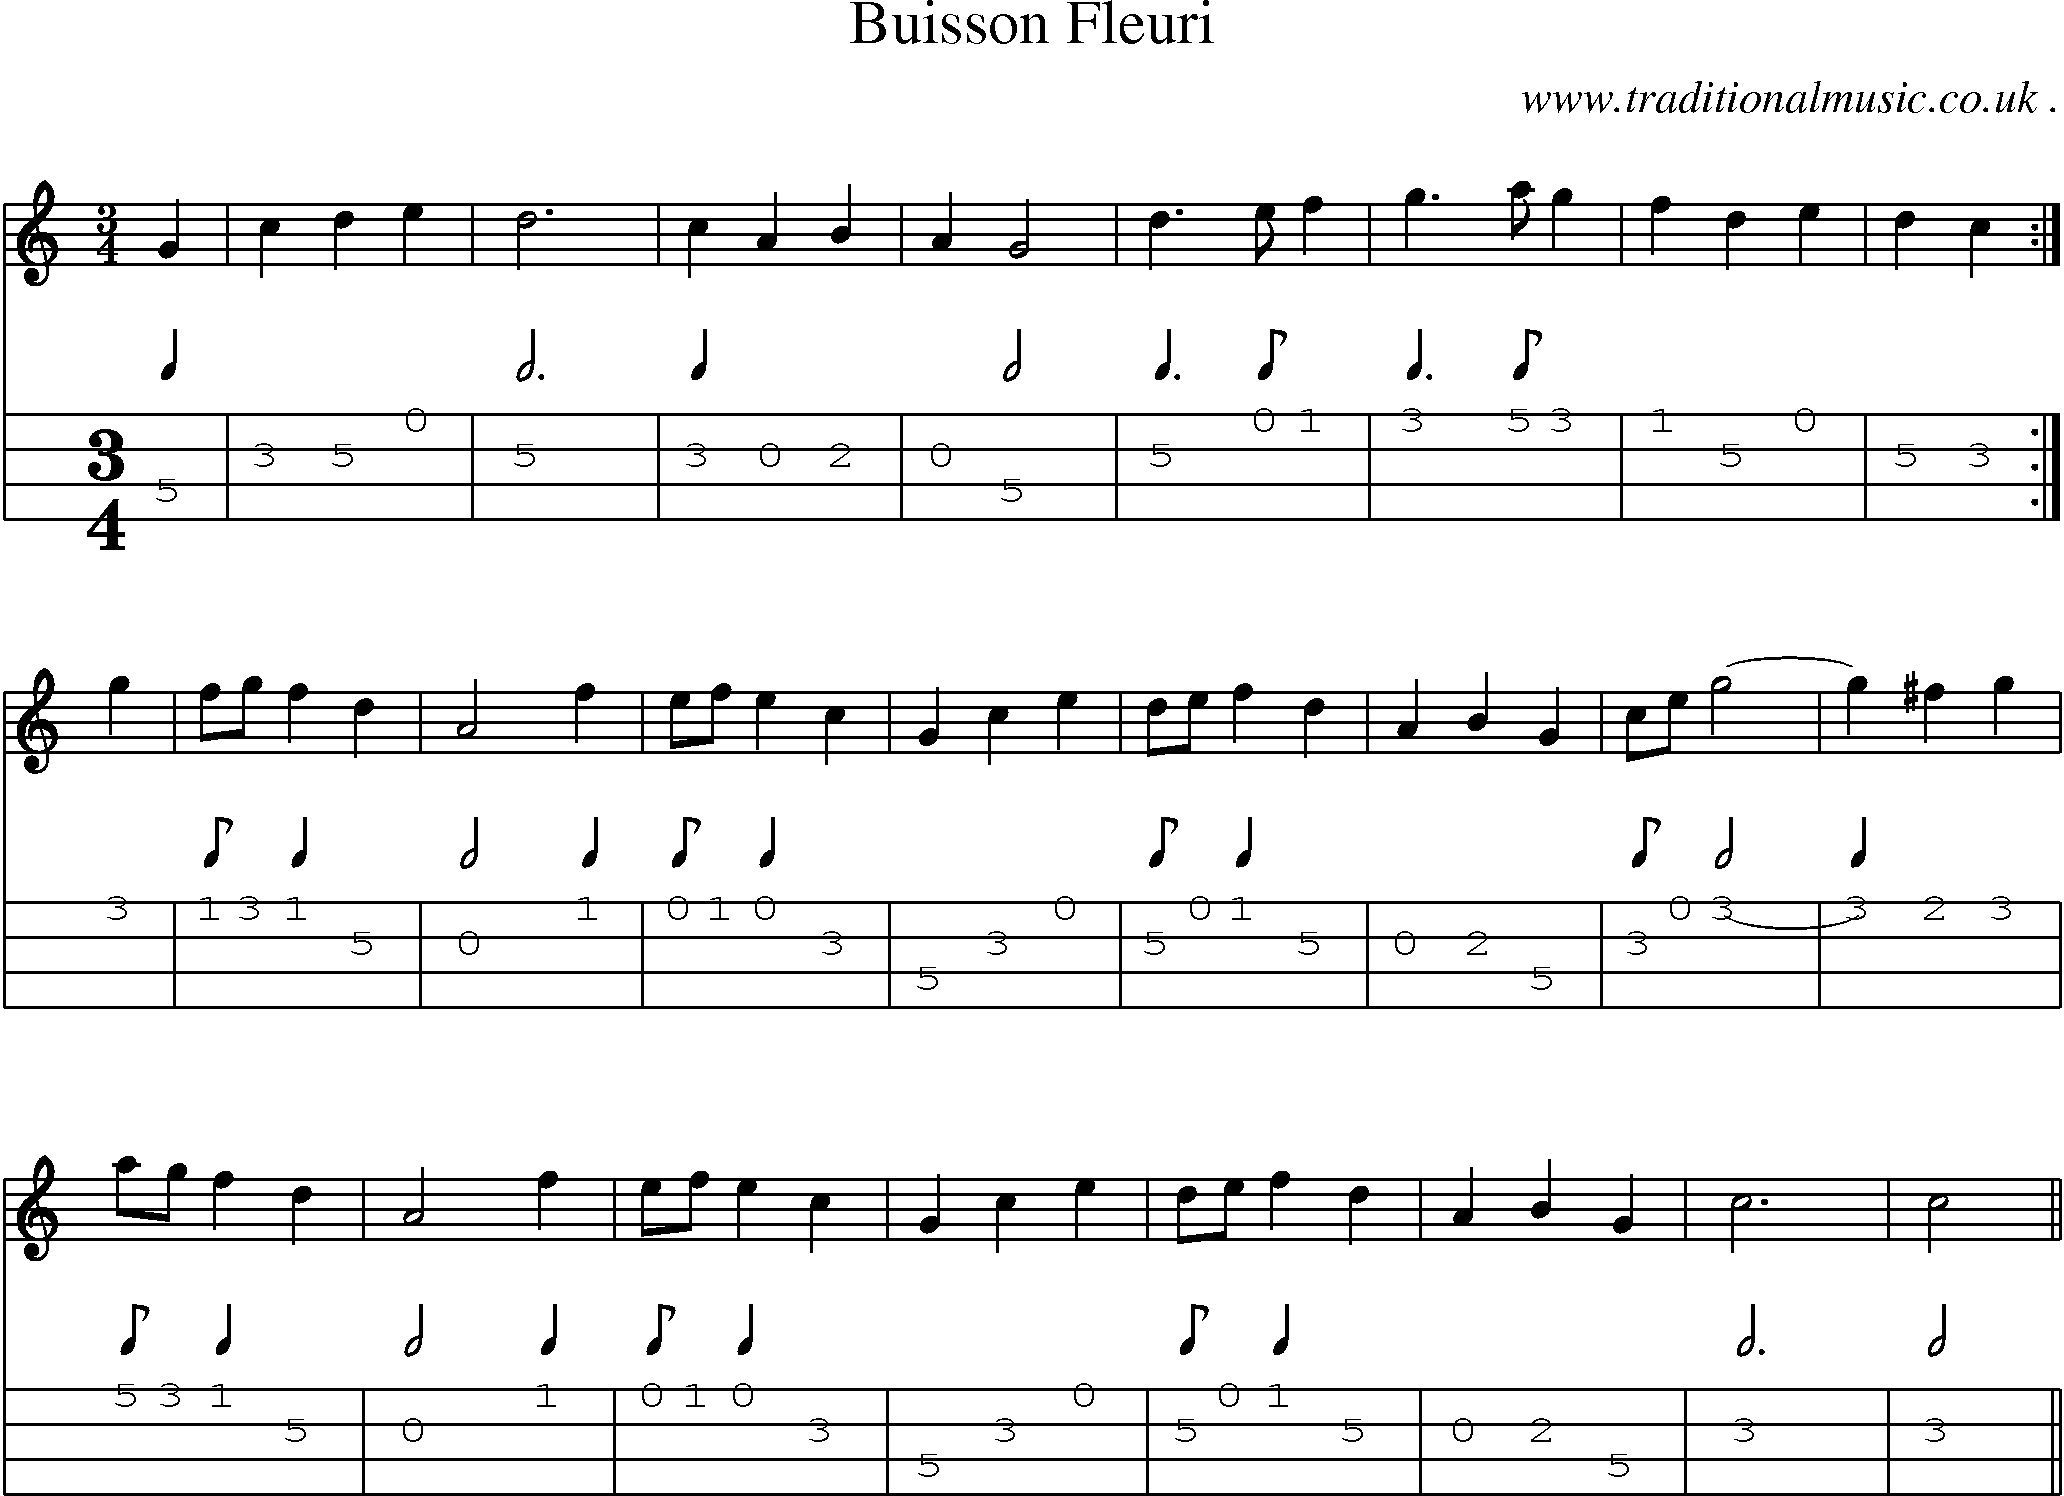 Sheet-Music and Mandolin Tabs for Buisson Fleuri